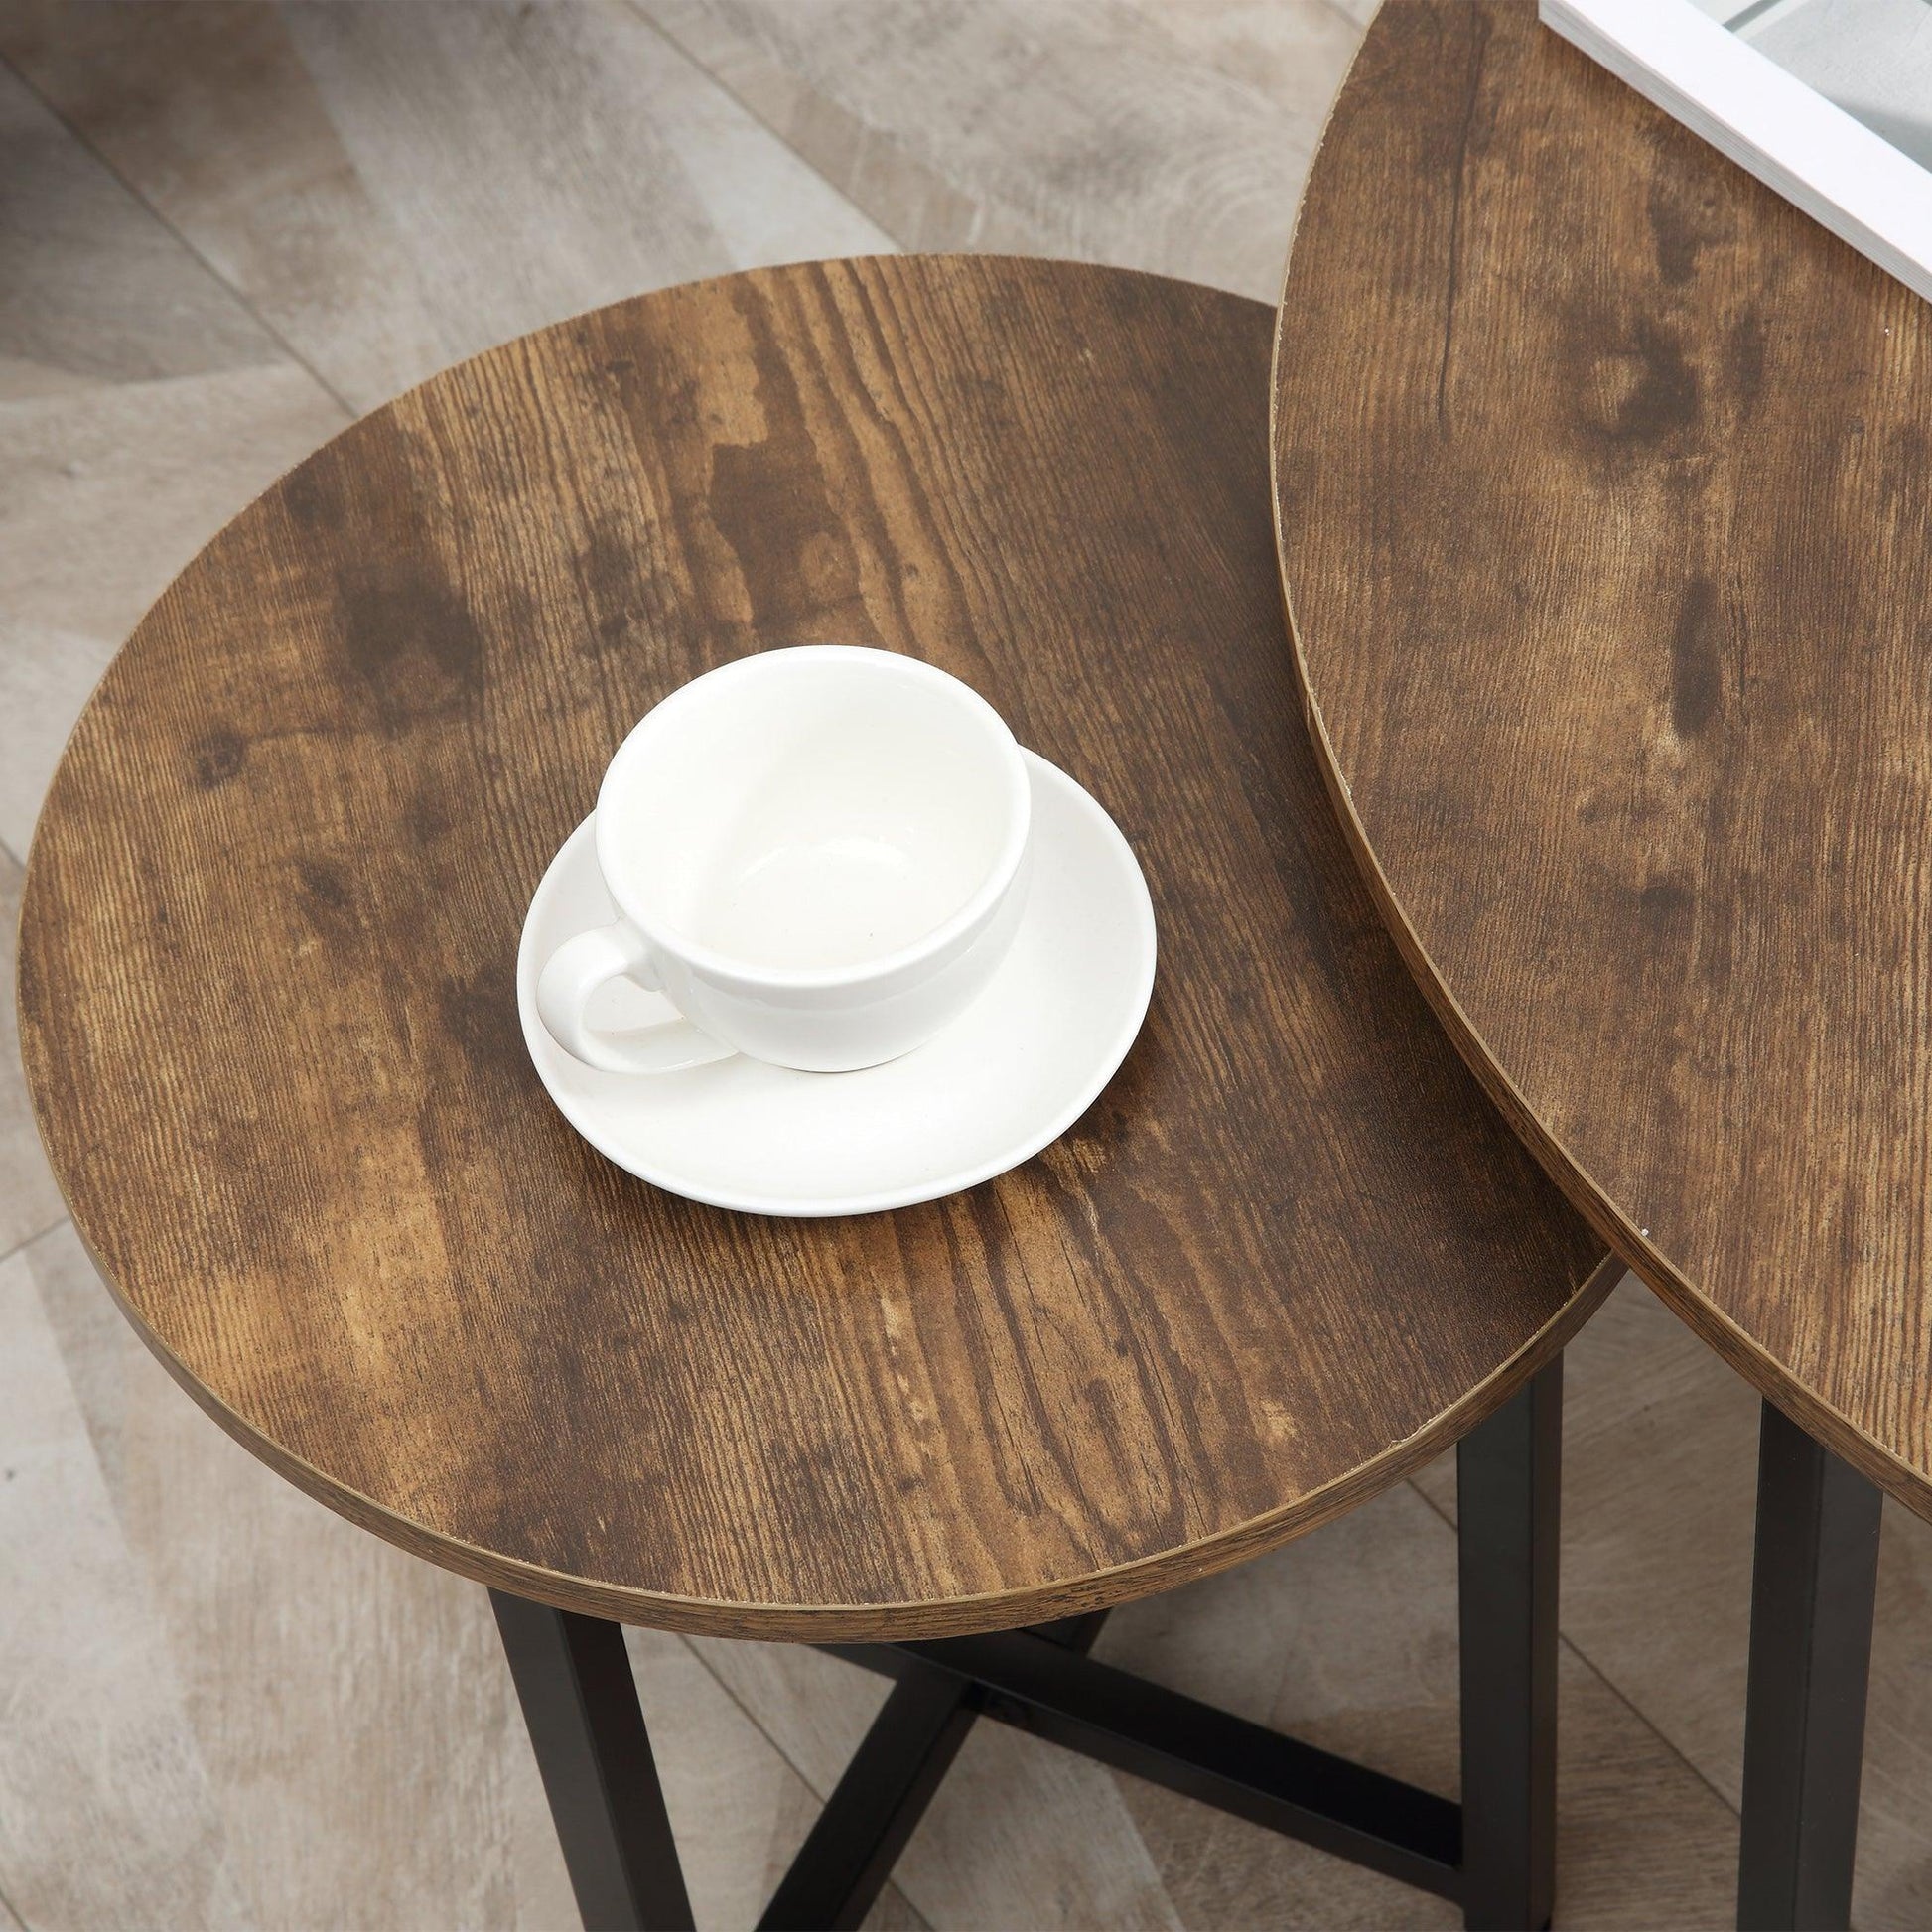 HOMCOM Rustic Brown Coffee Table Set - 2 Nesting Tables - ALL4U RETAILER LTD